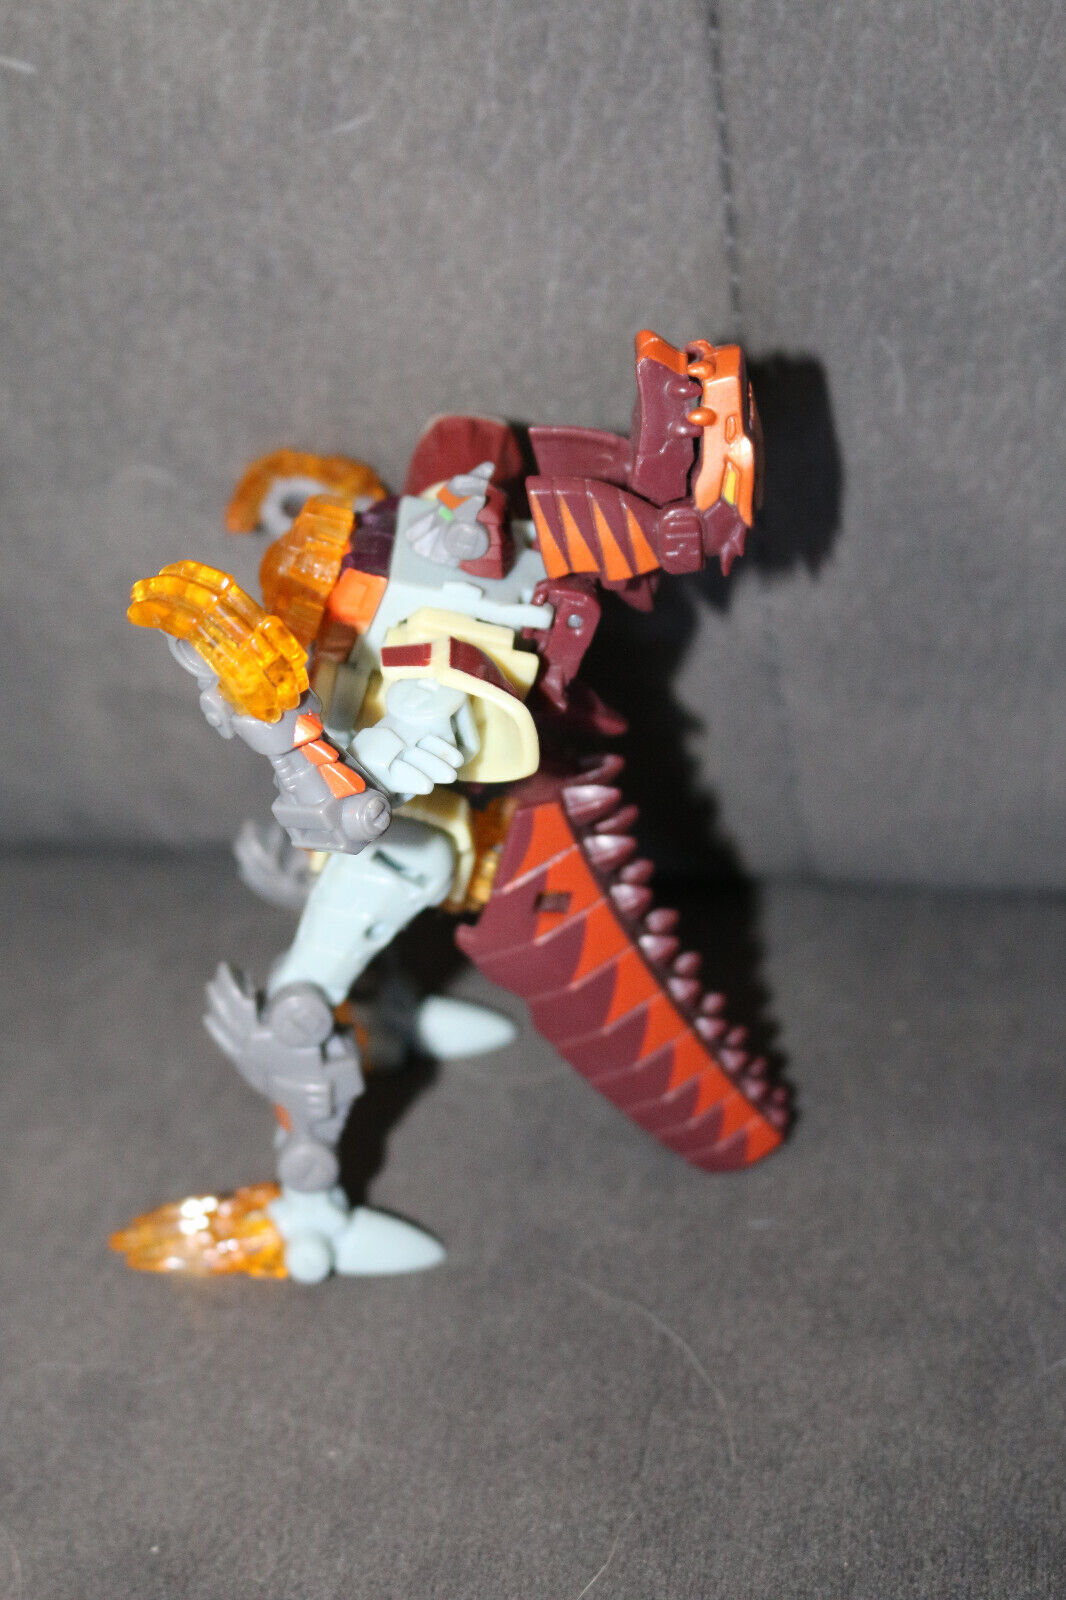 05’Transformers Energon Terrorcon Energon Class: Decepticon Doom-Lock Figure